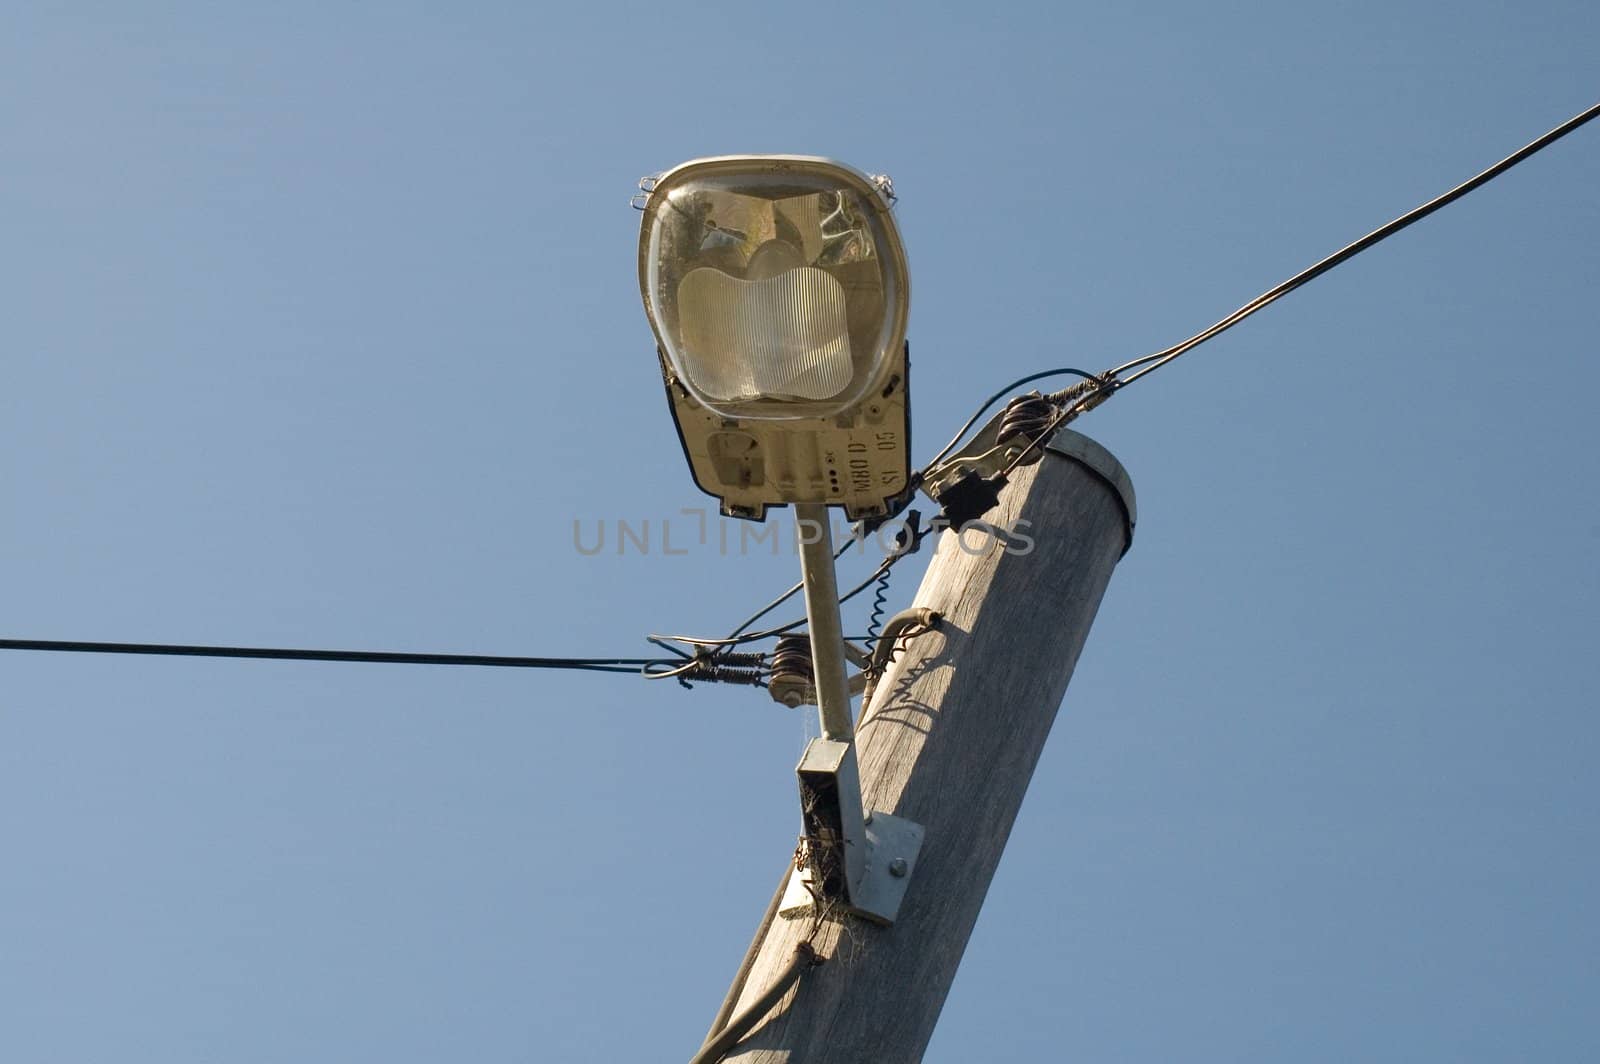 streetlamp by rorem